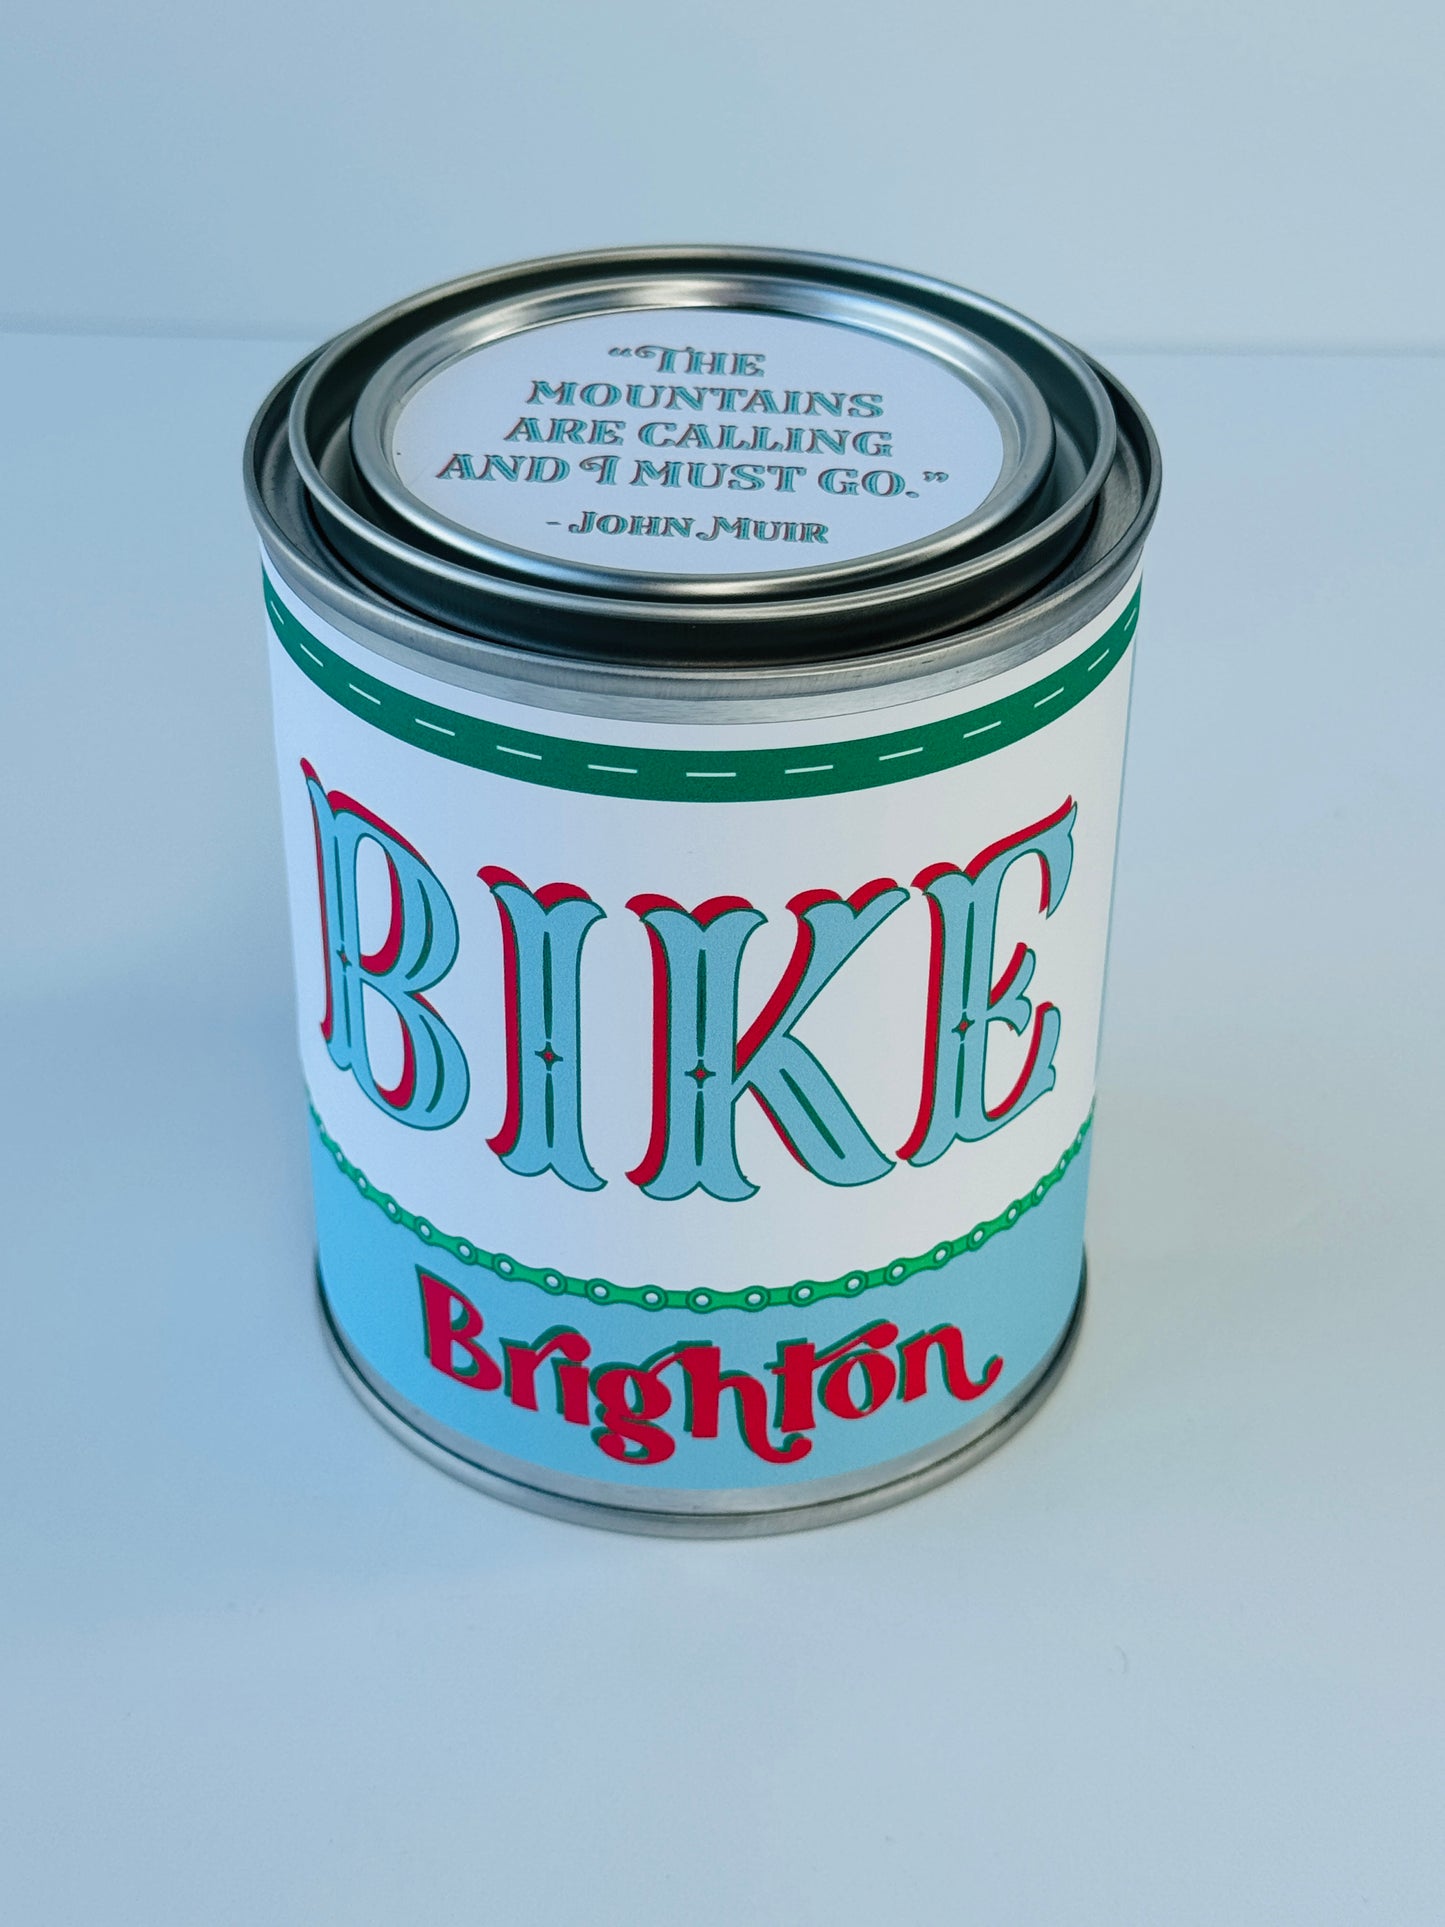 Bike Brighton - Paint Tin Candle